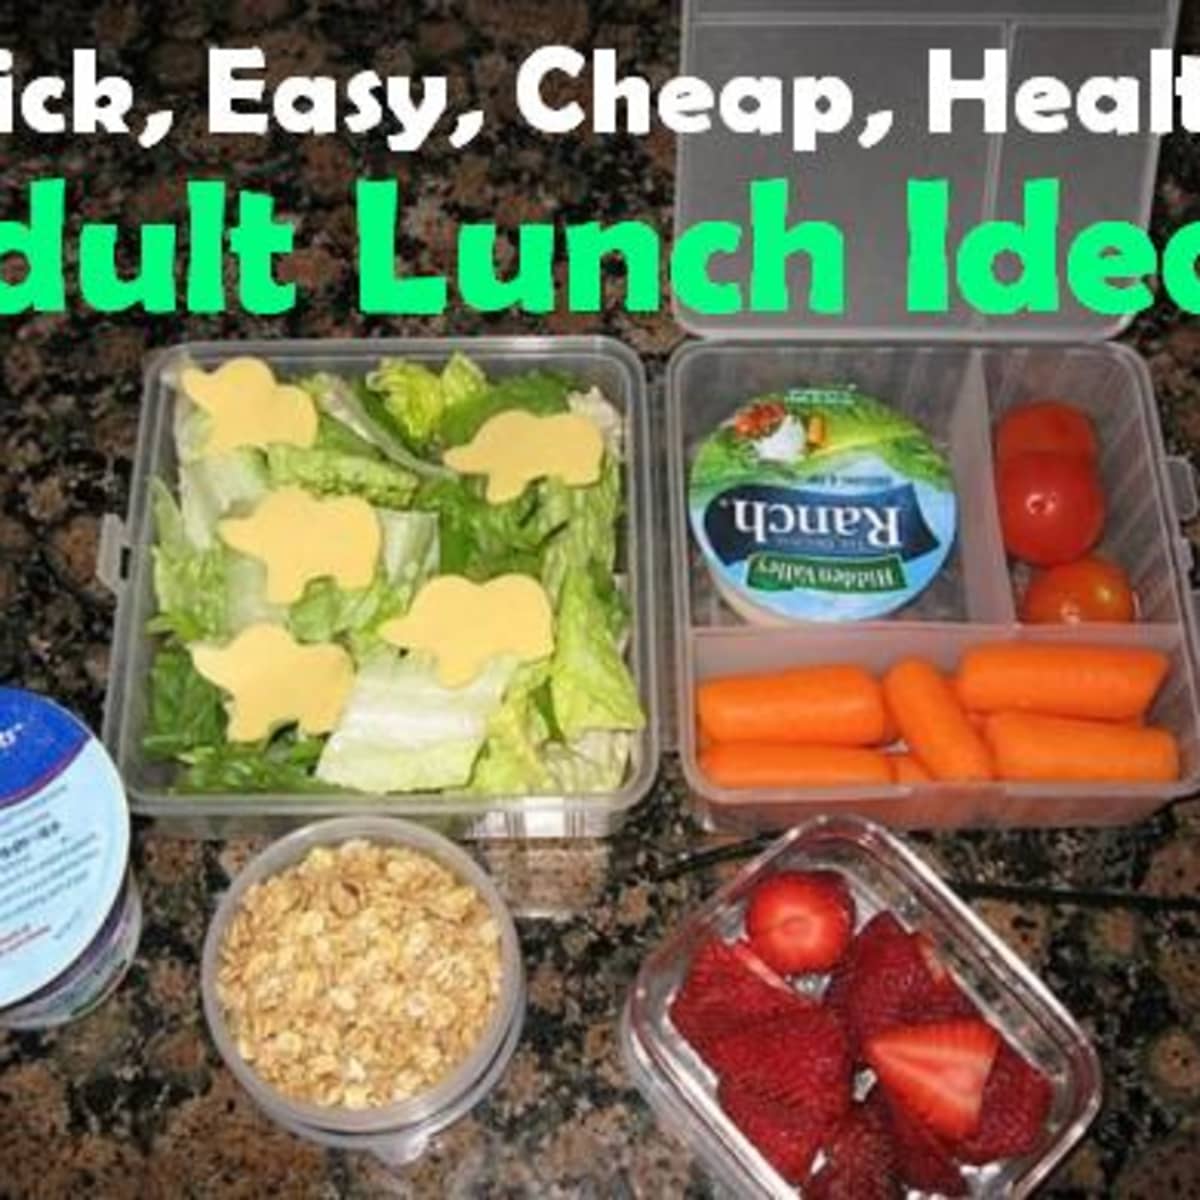 Un-boring Brown Bagging - Easy Frugal Work Lunch Ideas